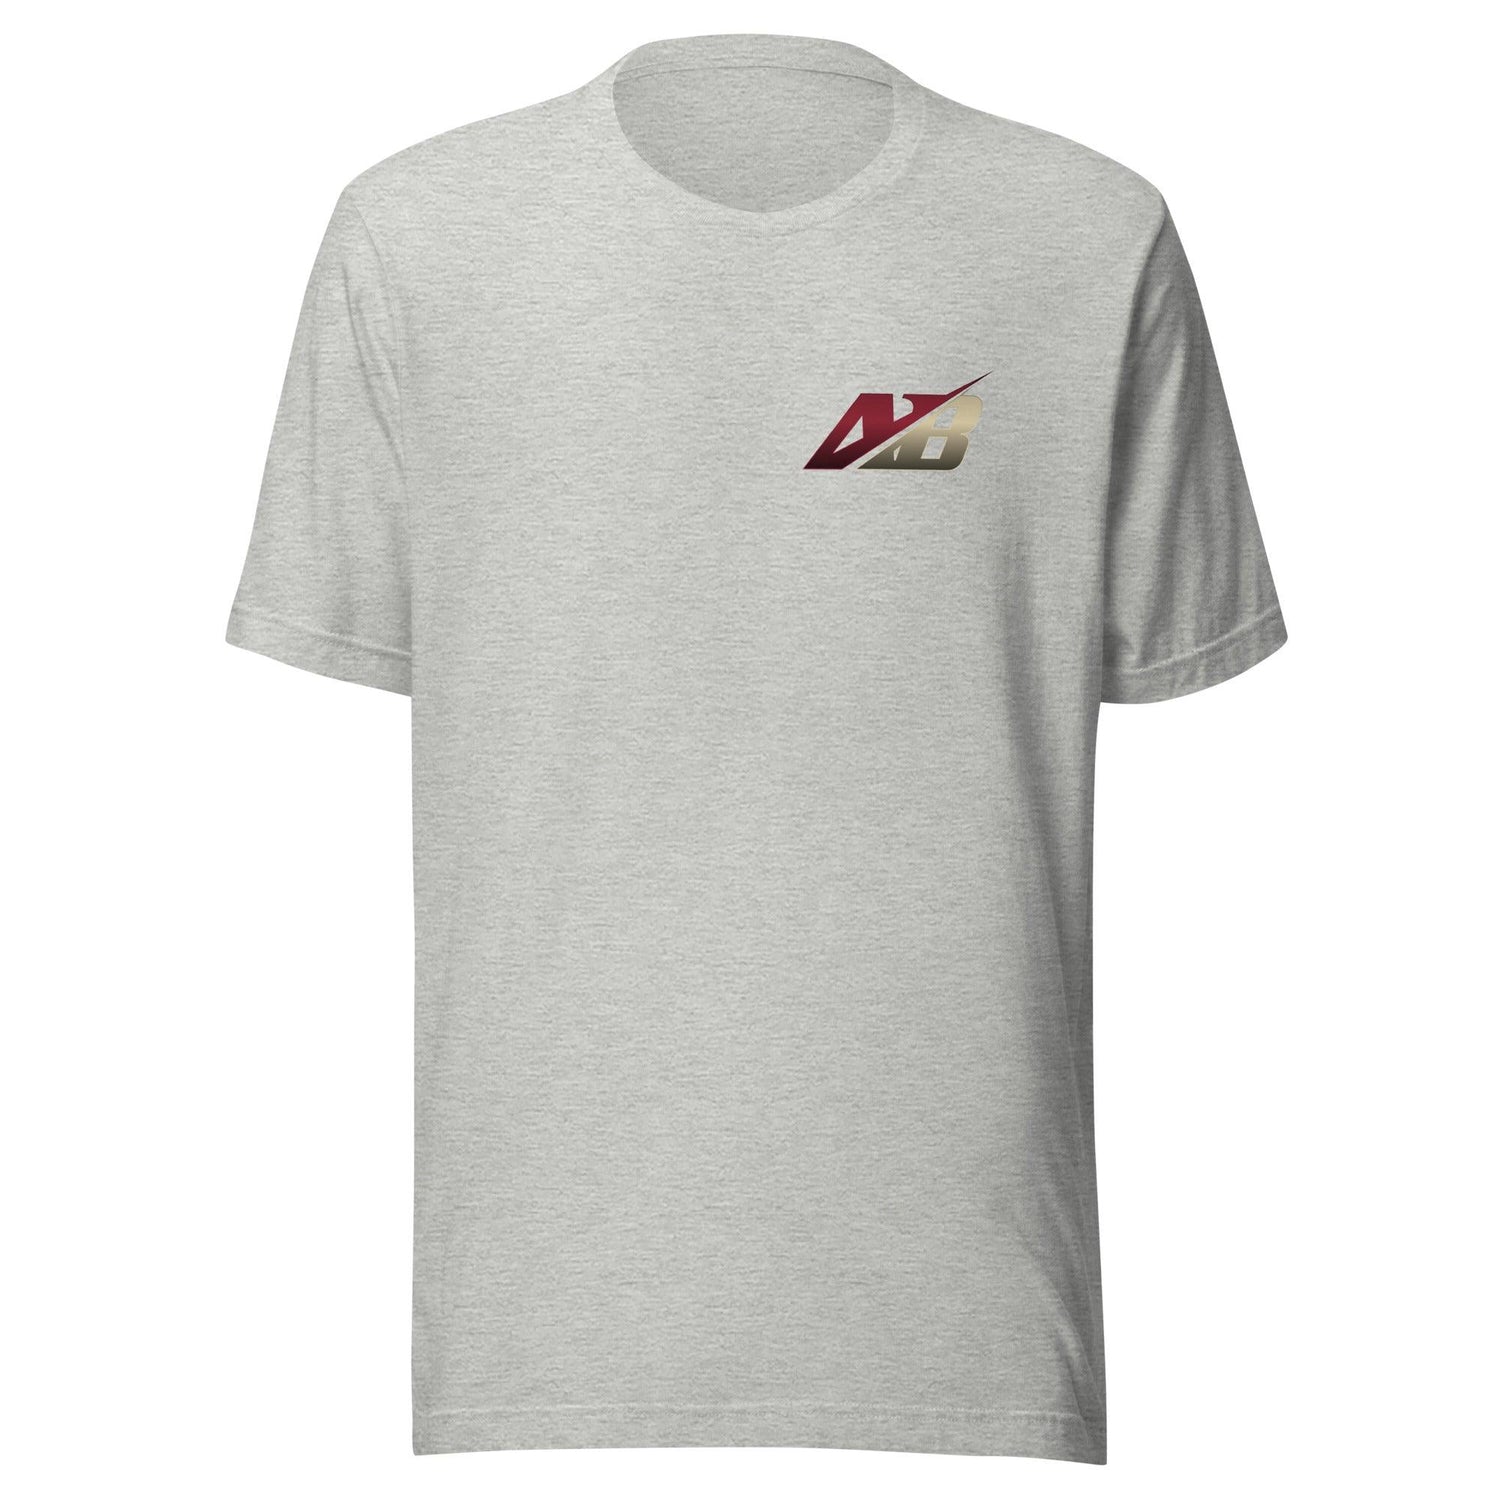 Alex Broome "Essential" t-shirt - Fan Arch